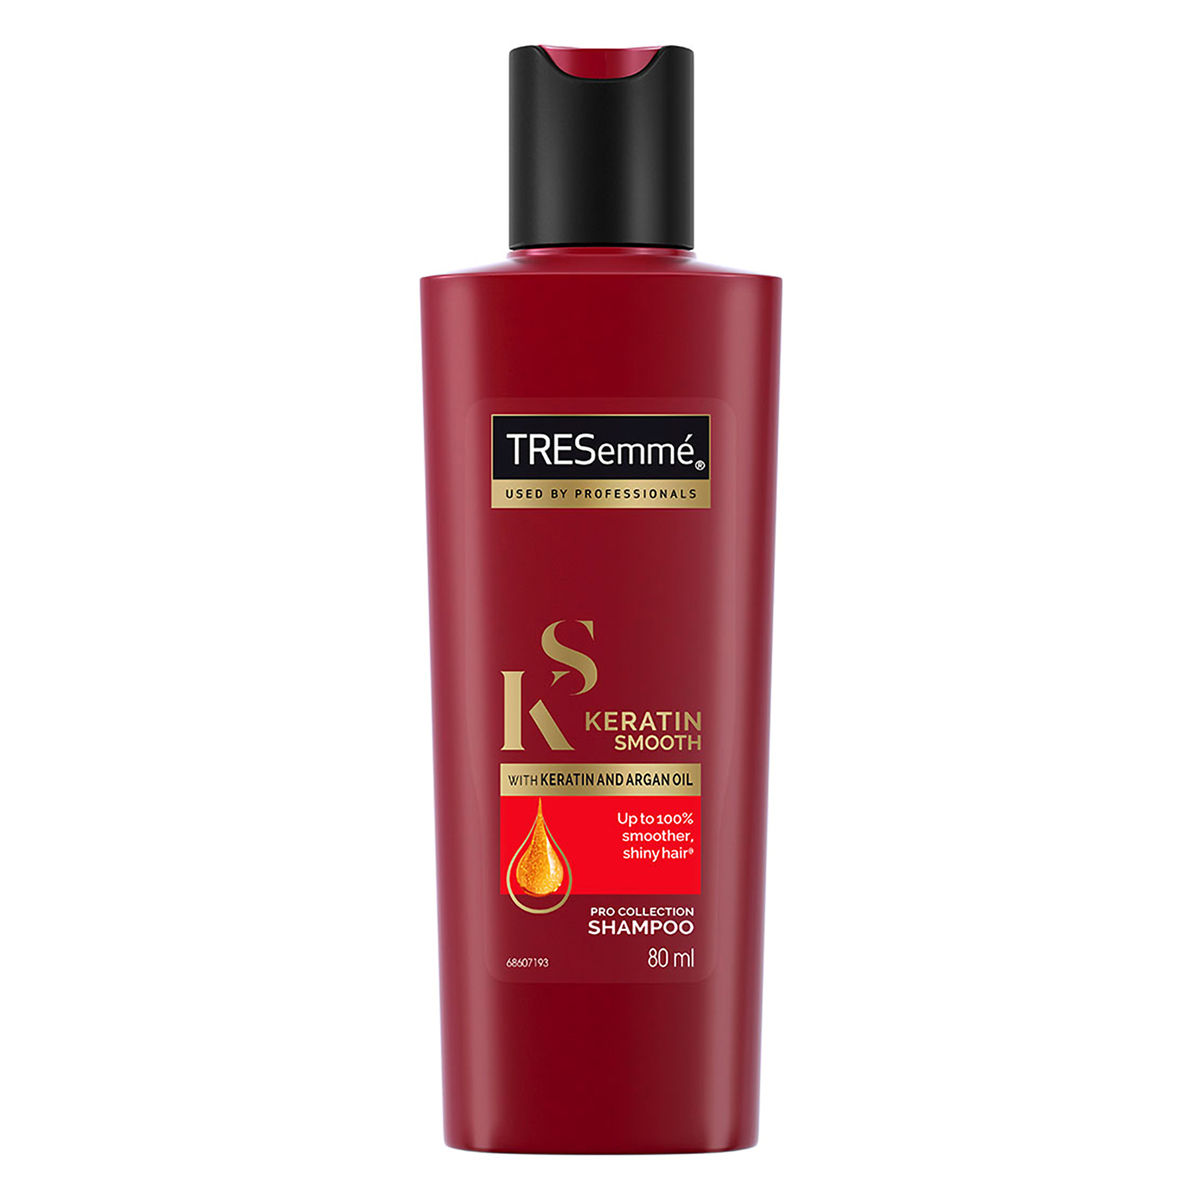 Buy Tresemme Keratin Smooth Shampoo with Argan Oil, 80 ml Online